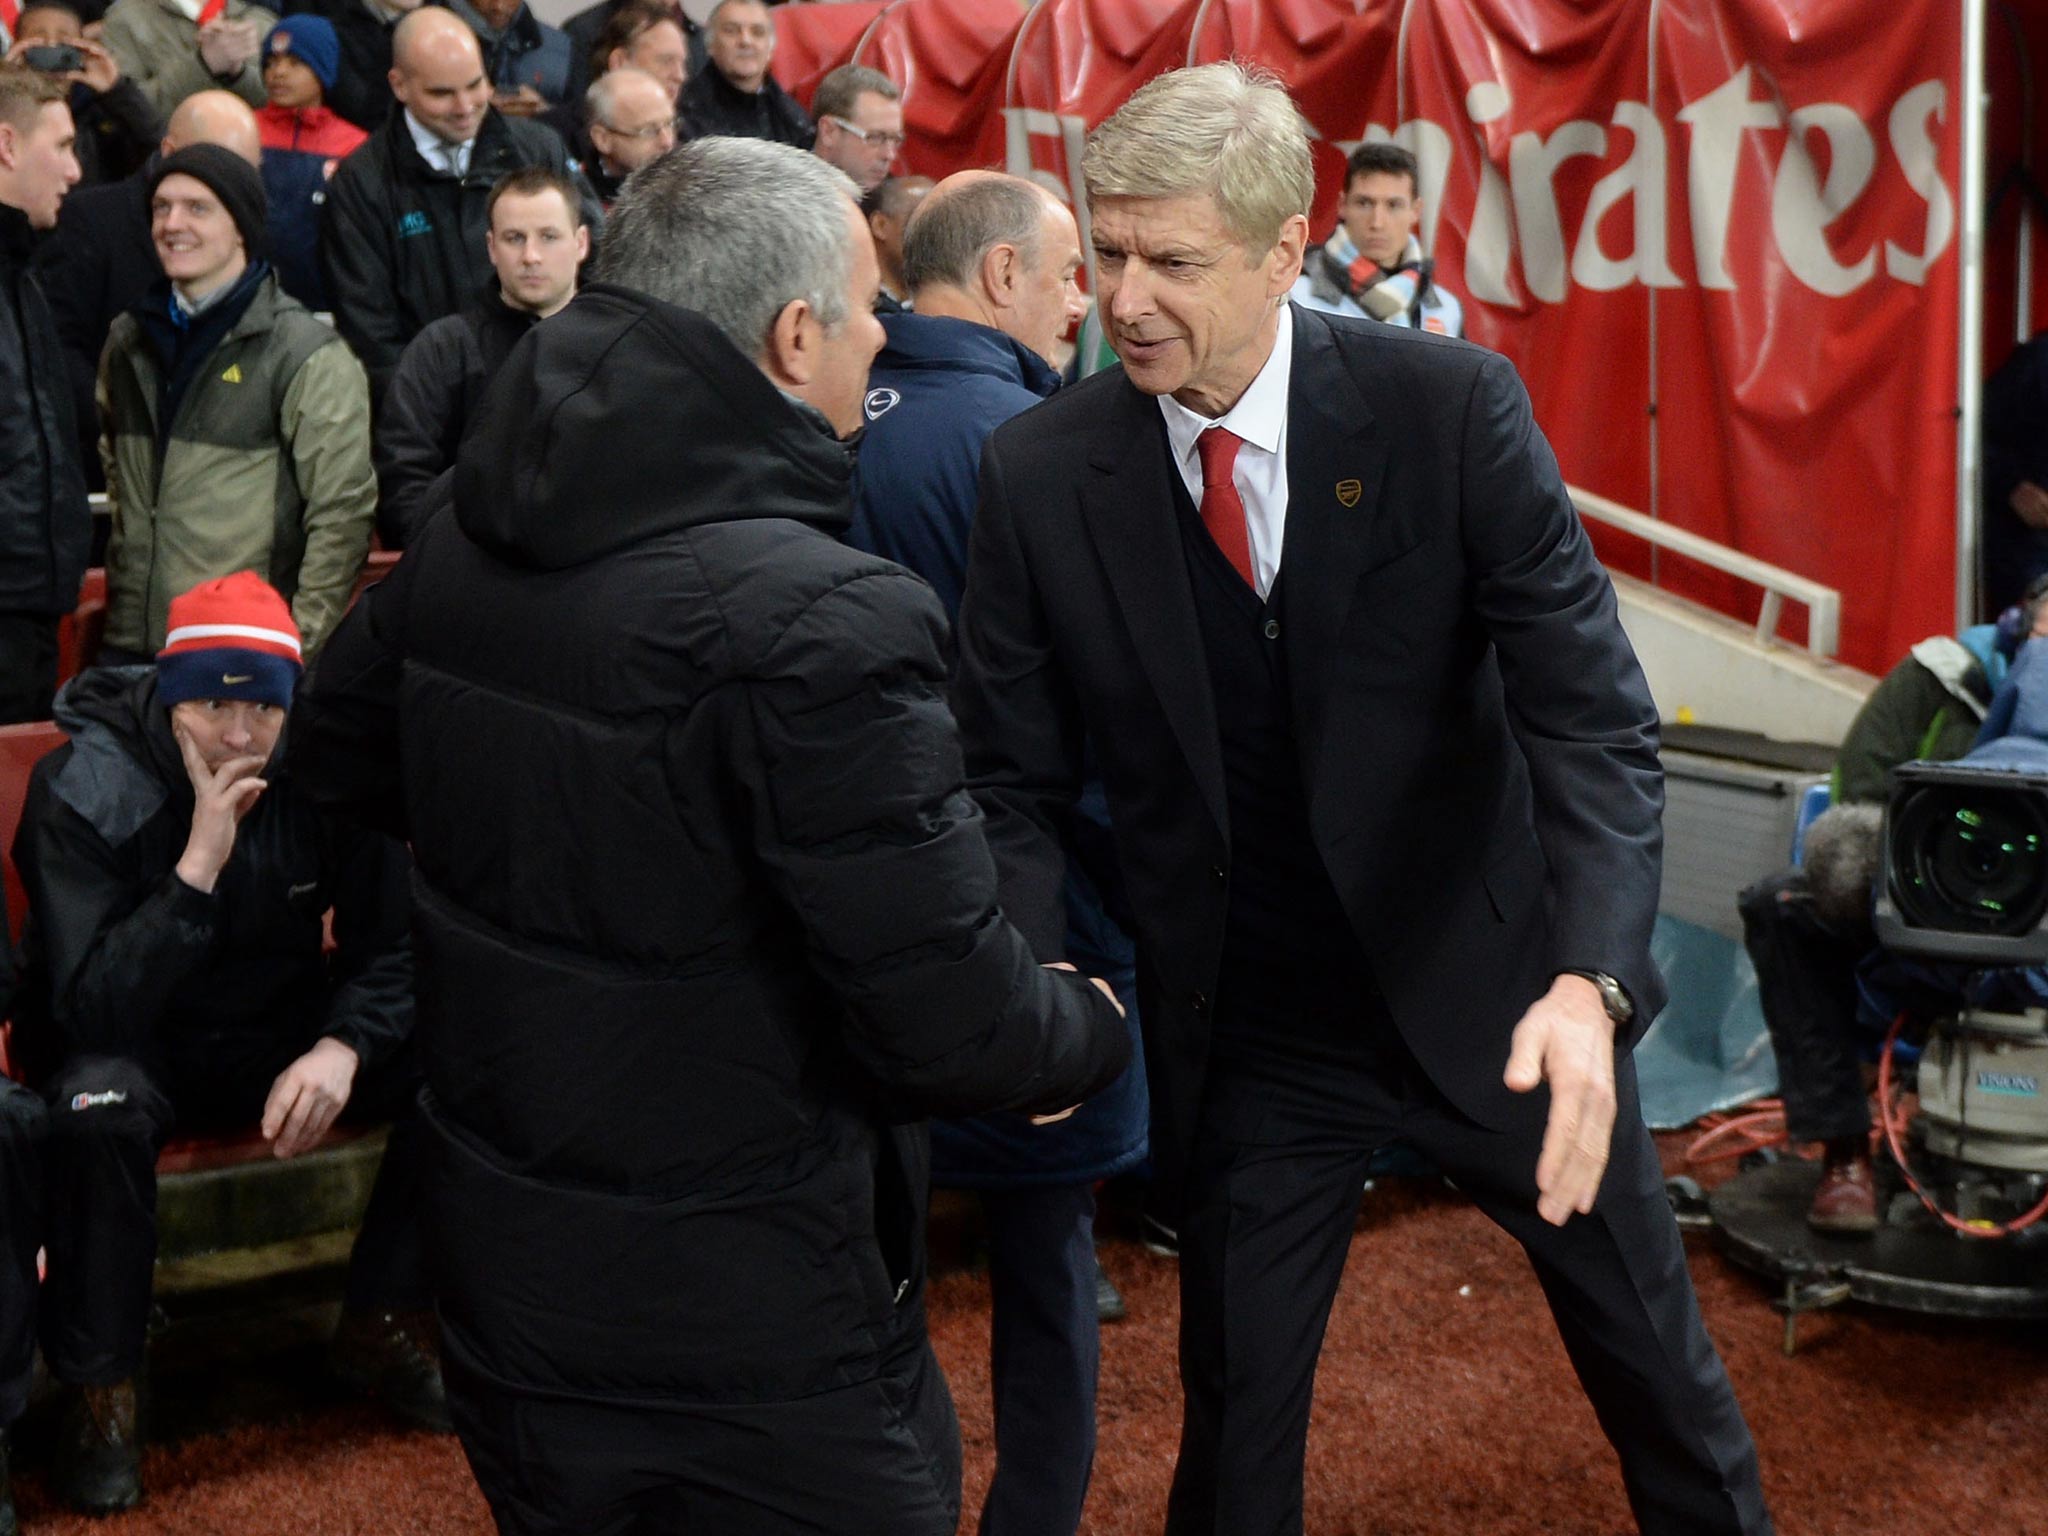 Jose Mourinho and Arsene Wenger shake hands